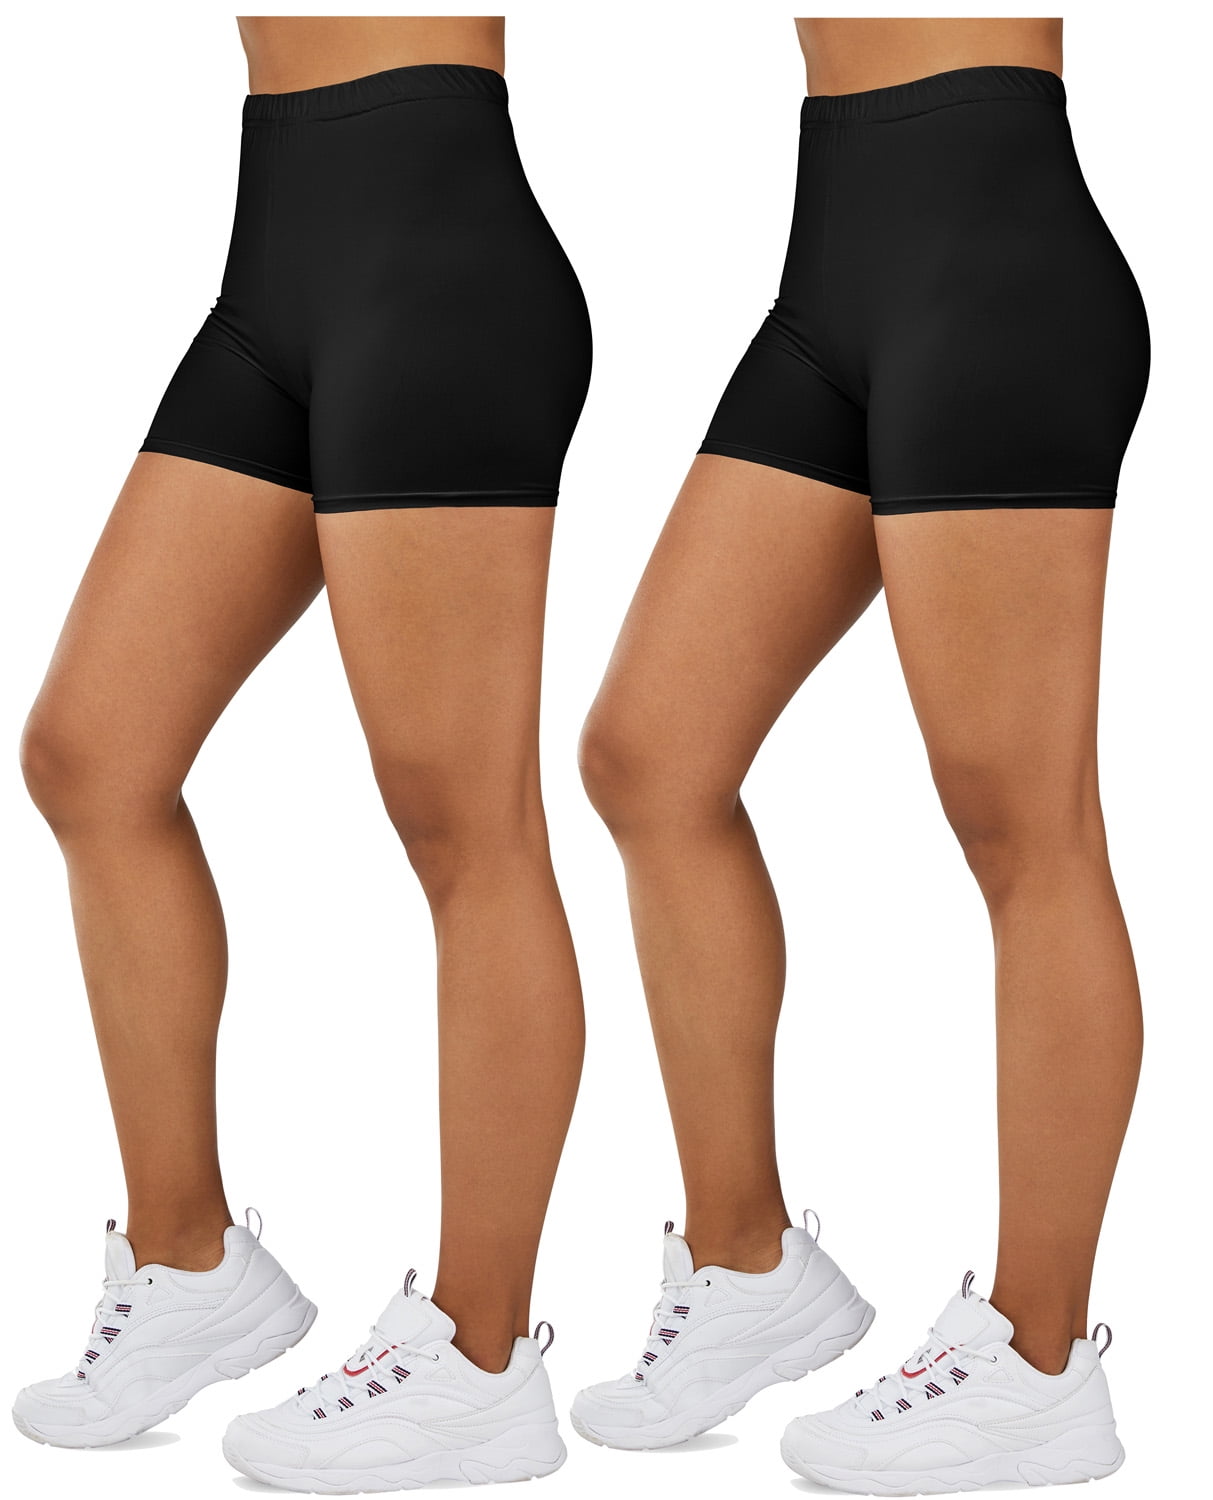 Gilbin Ultra Soft High Waist Yoga Stretch Mini-Bike Shorts Leggings for  Women-Many Colors-One Size & Plus Size 2 Pack (White S-L) 